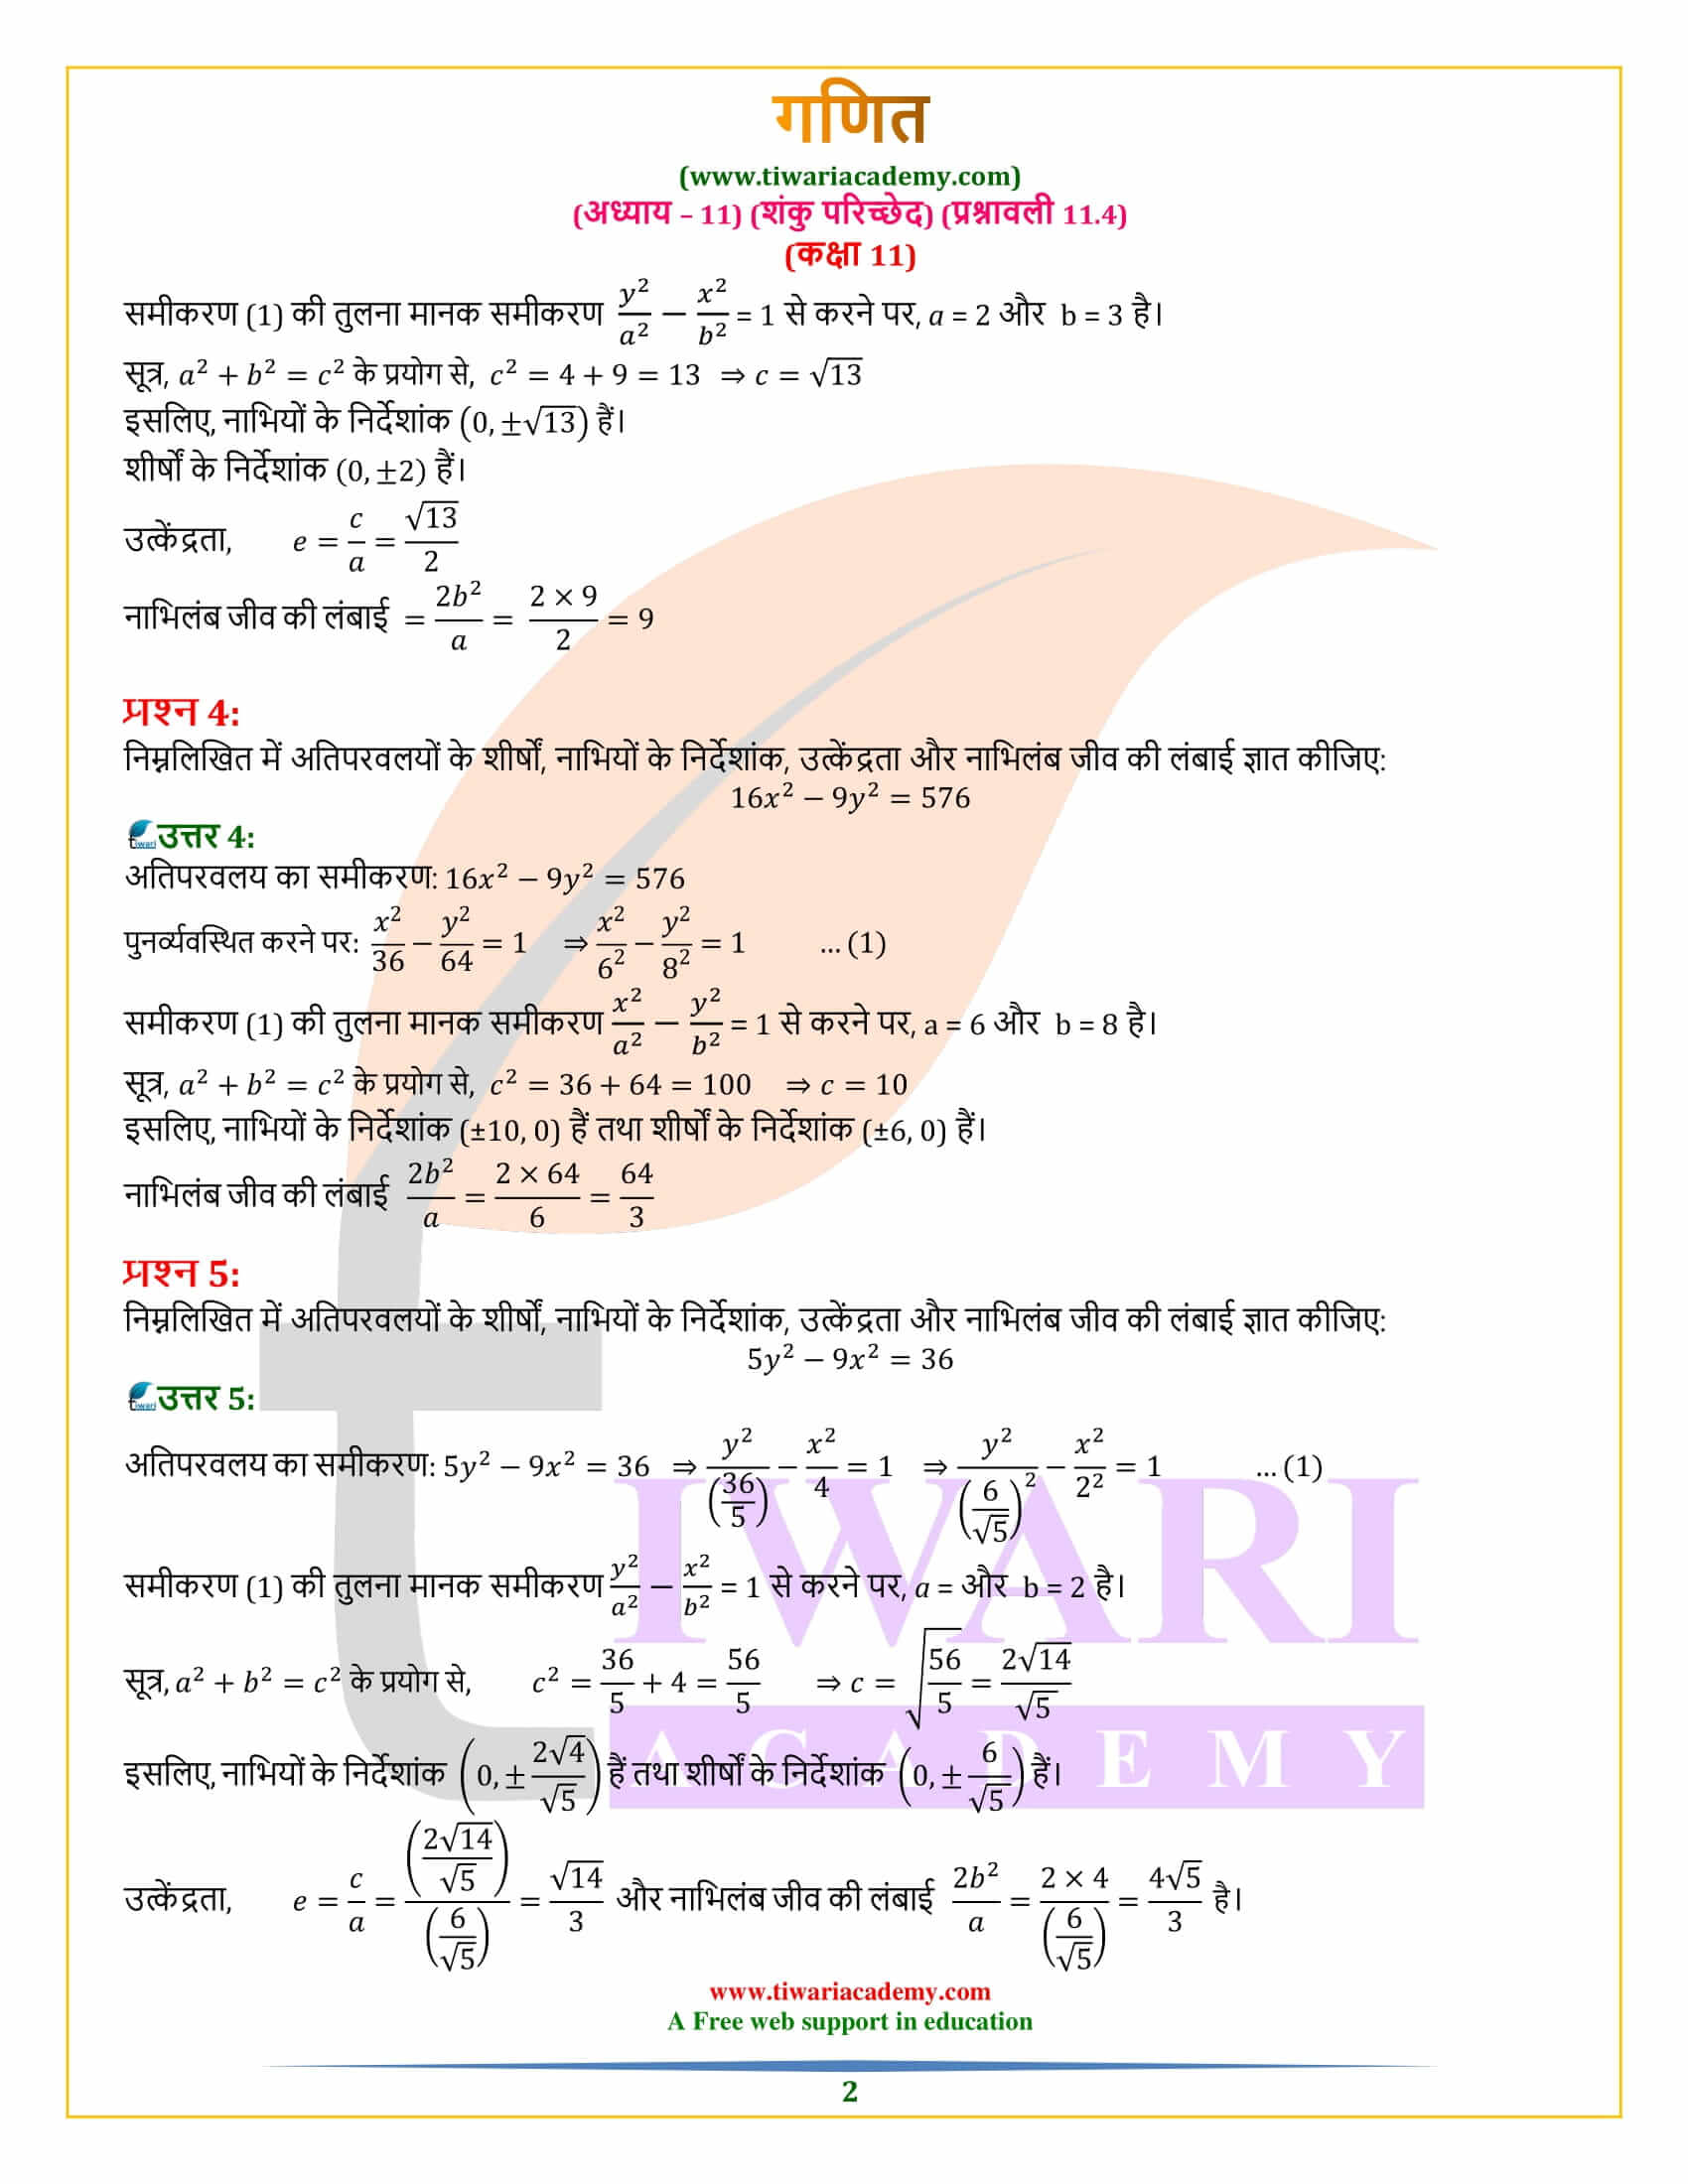 एनसीईआरटी समाधान कक्षा 11 गणित प्रश्नावली 11.4